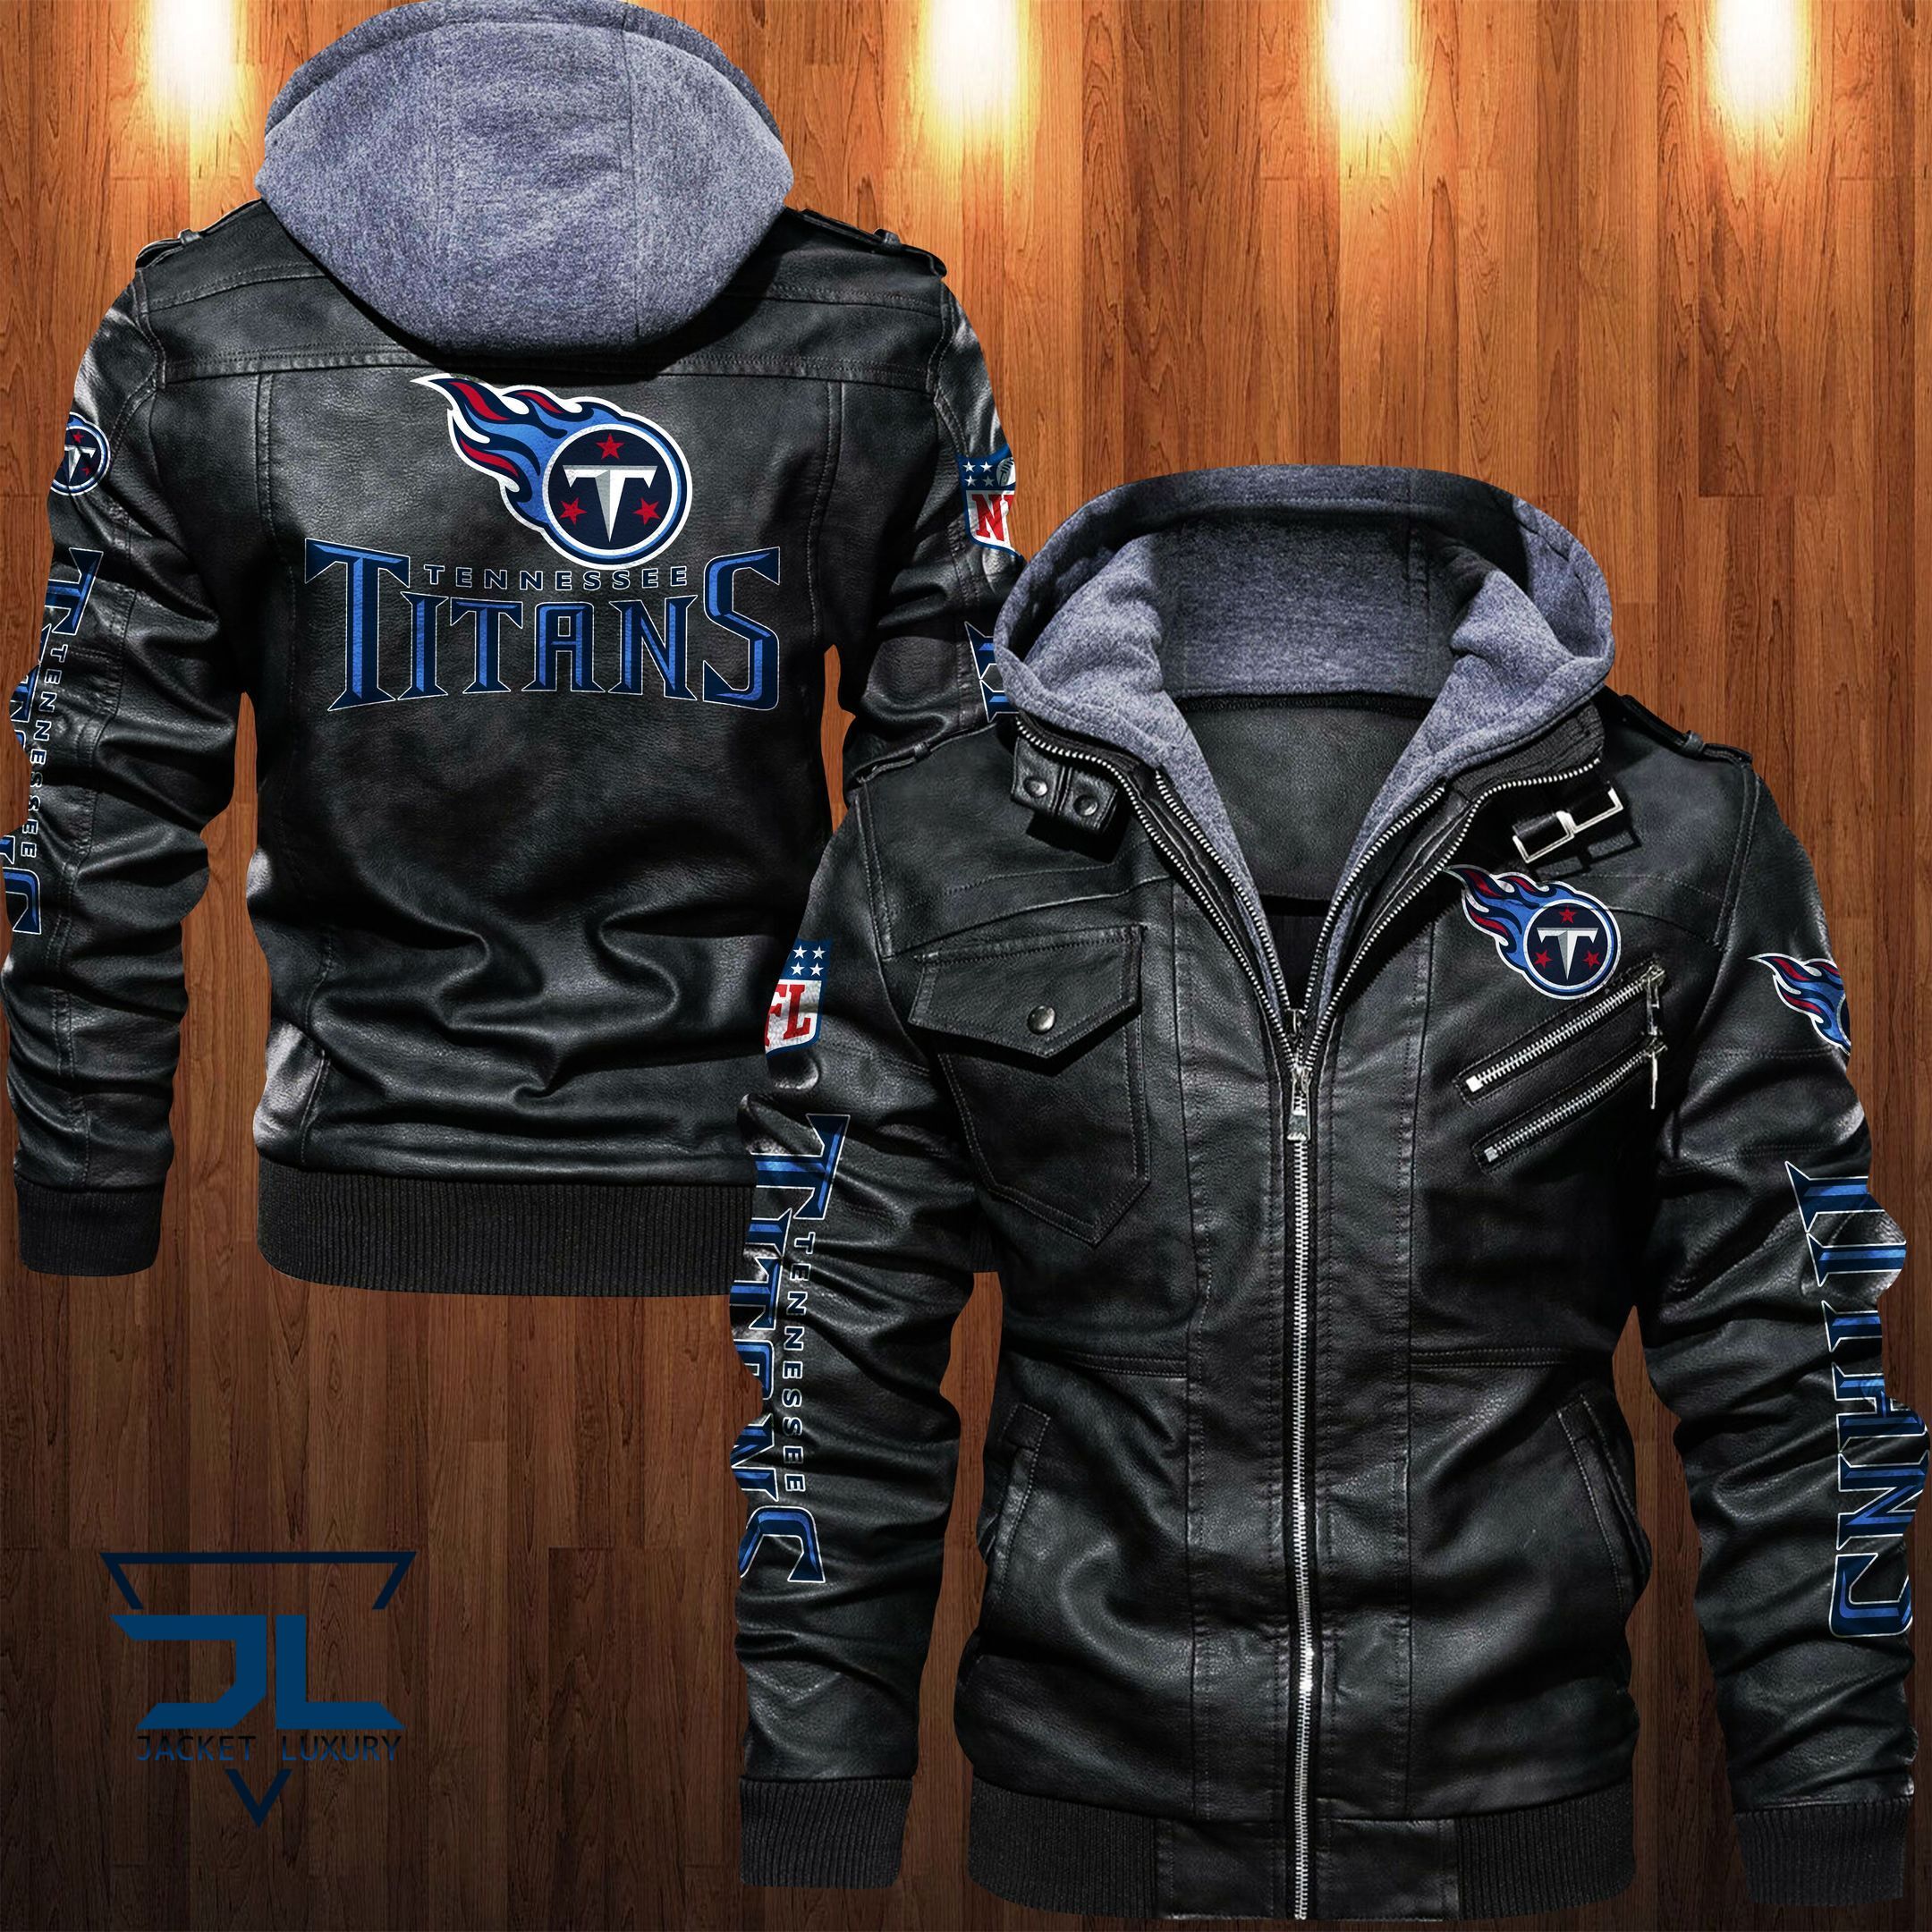 What Leather jacket Sells Best on Techcomshop? 65